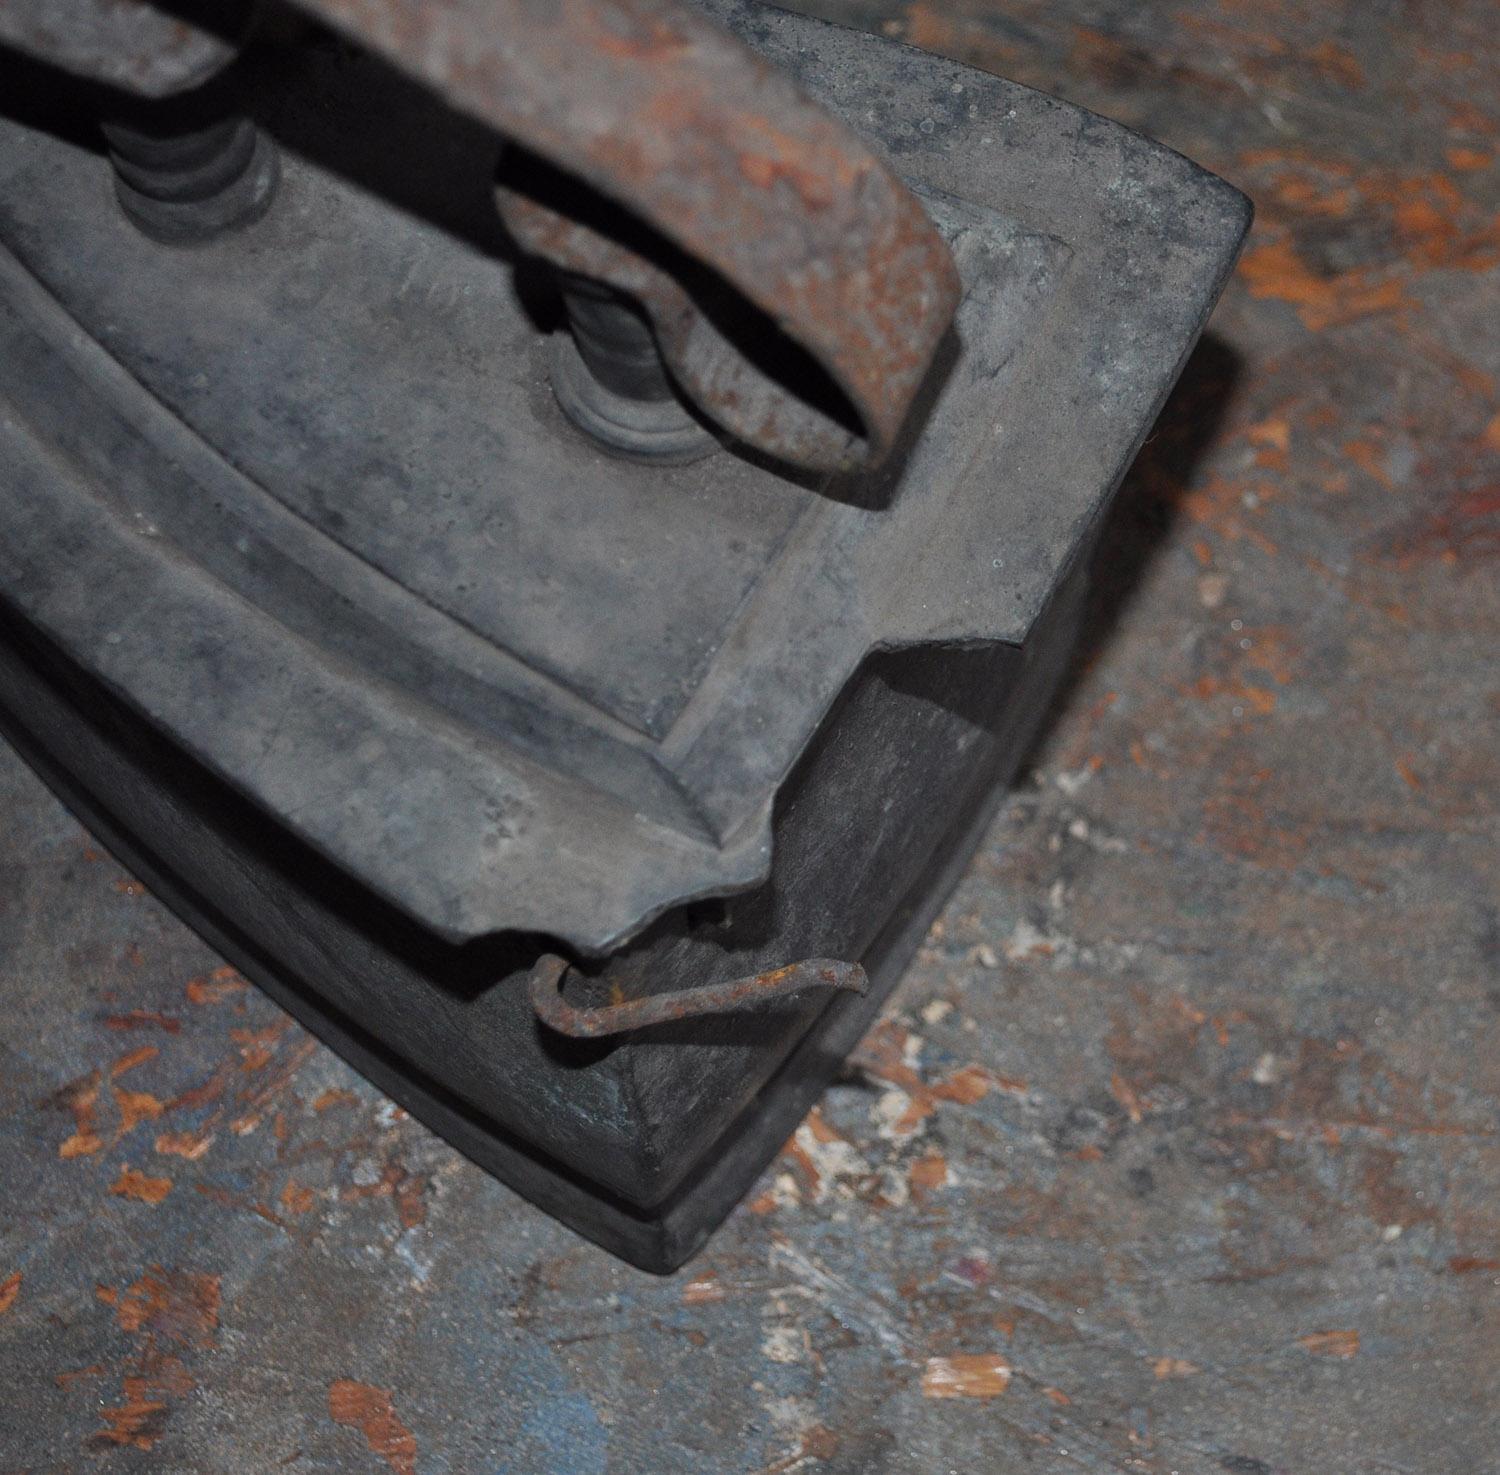 Early 20th century cast iron.
Original condition.
 